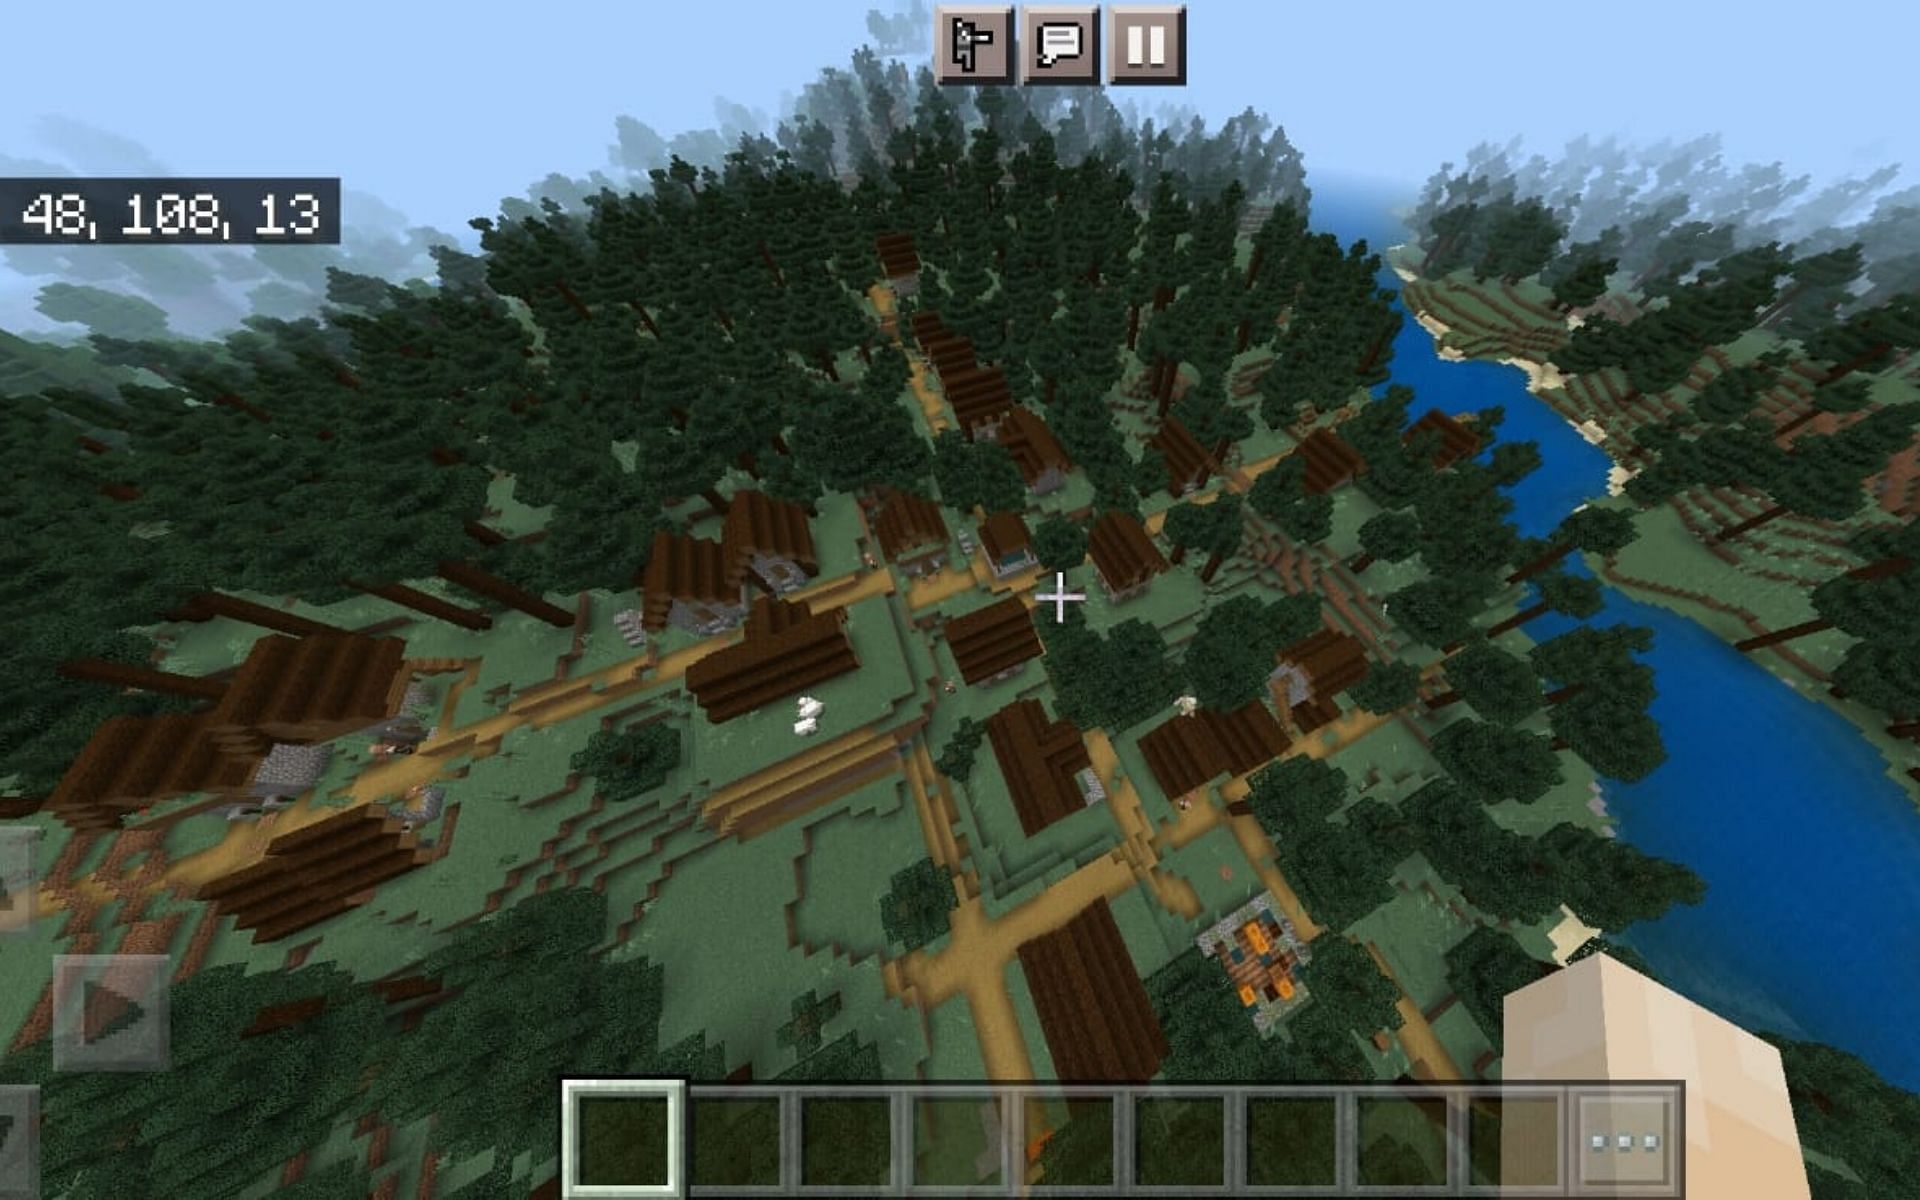 Spruce village (Image via Minecraft)